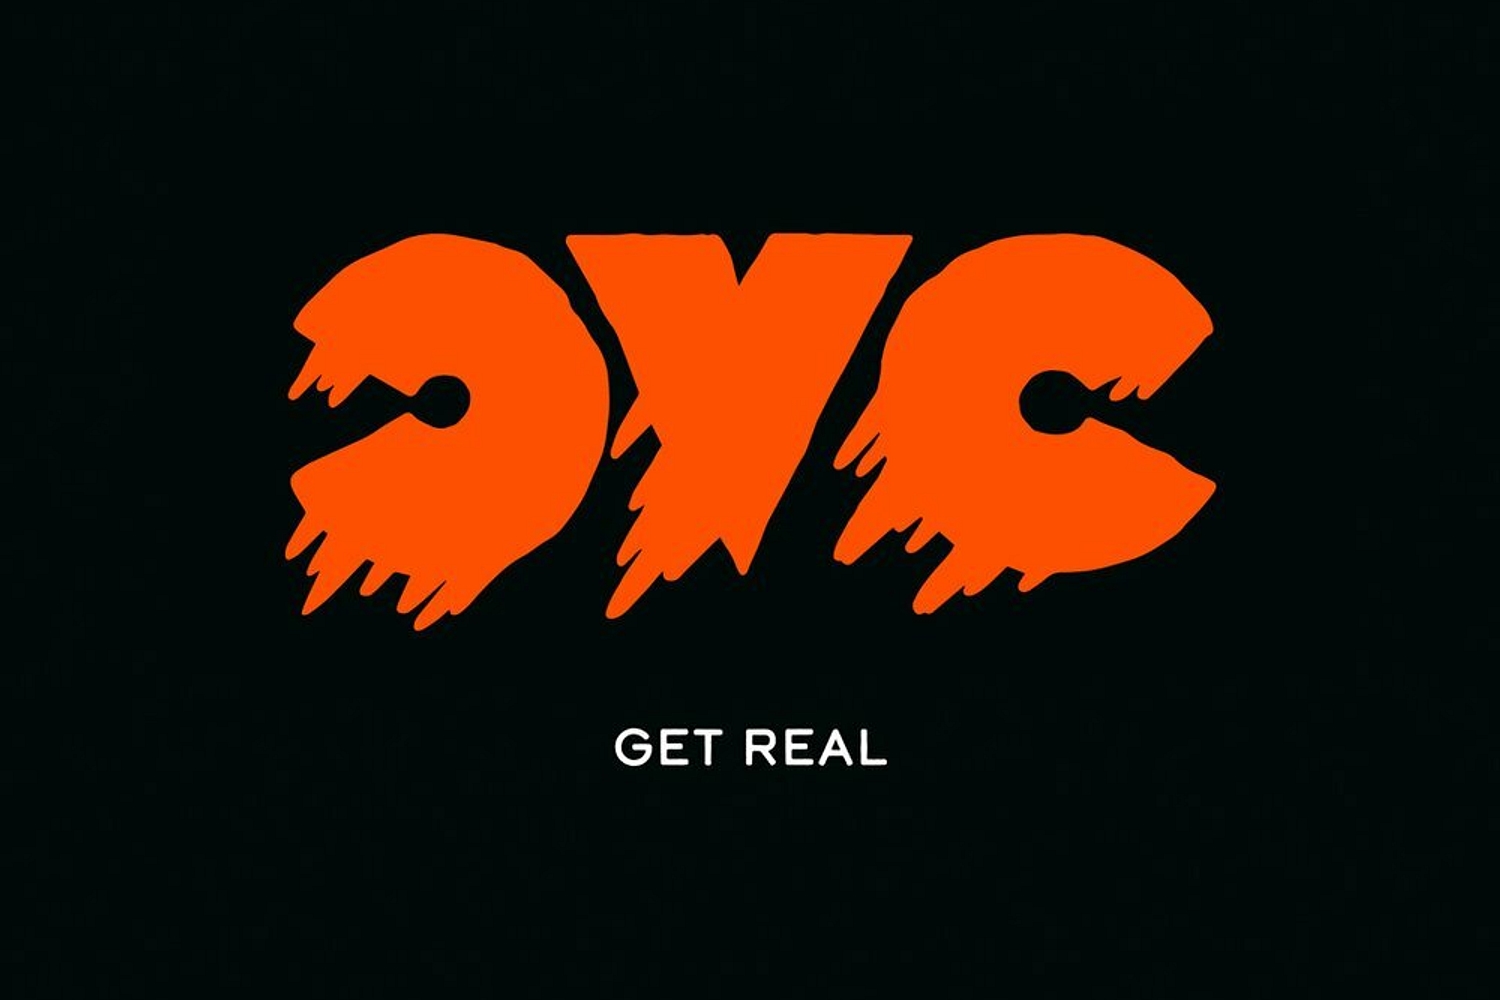 CVC - Get Real